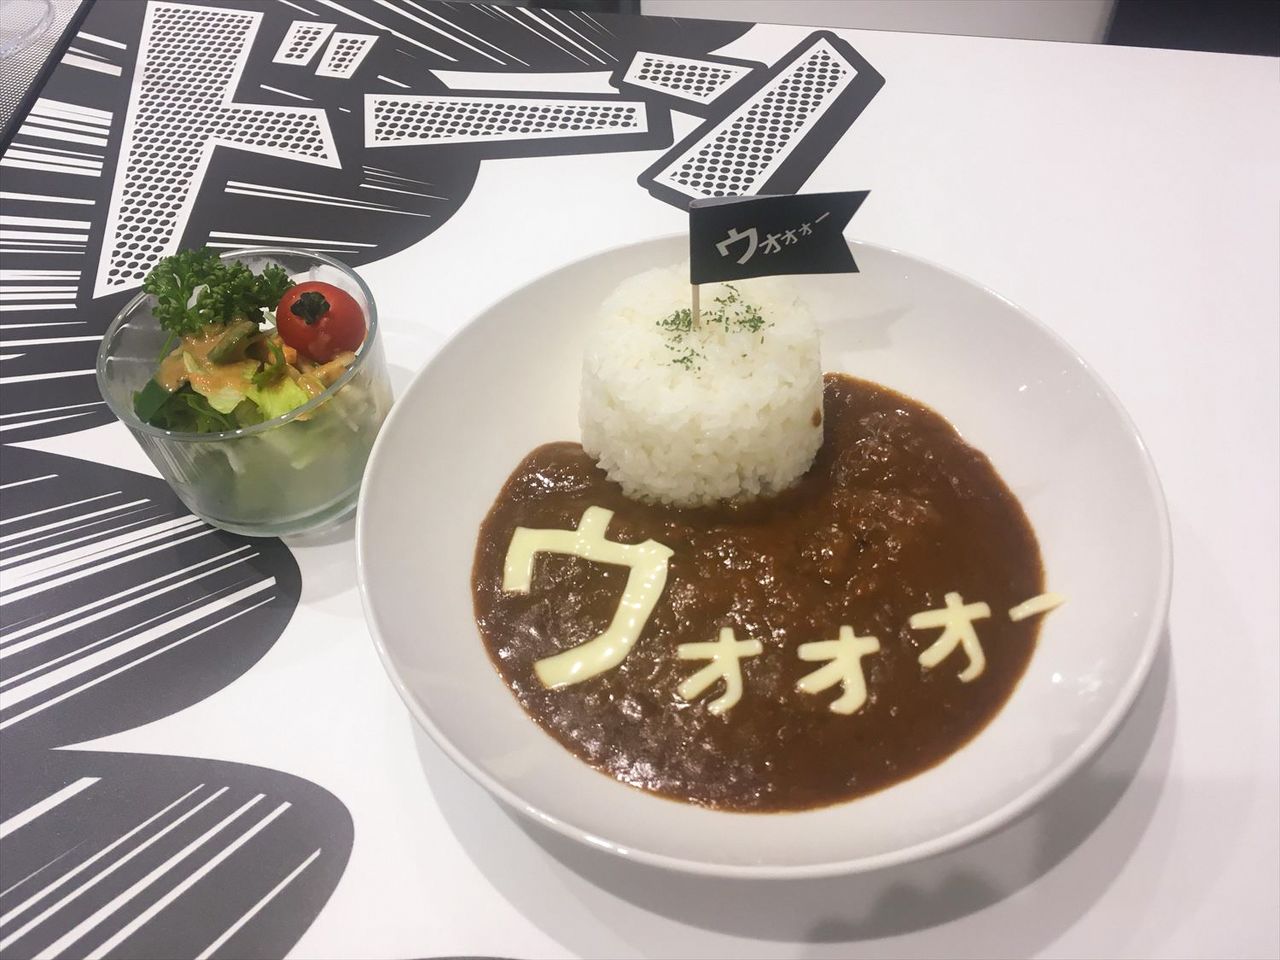 The manga cafe has some unique ideas on serving food. (Courtesy Yokote Masuda Manga Museum)